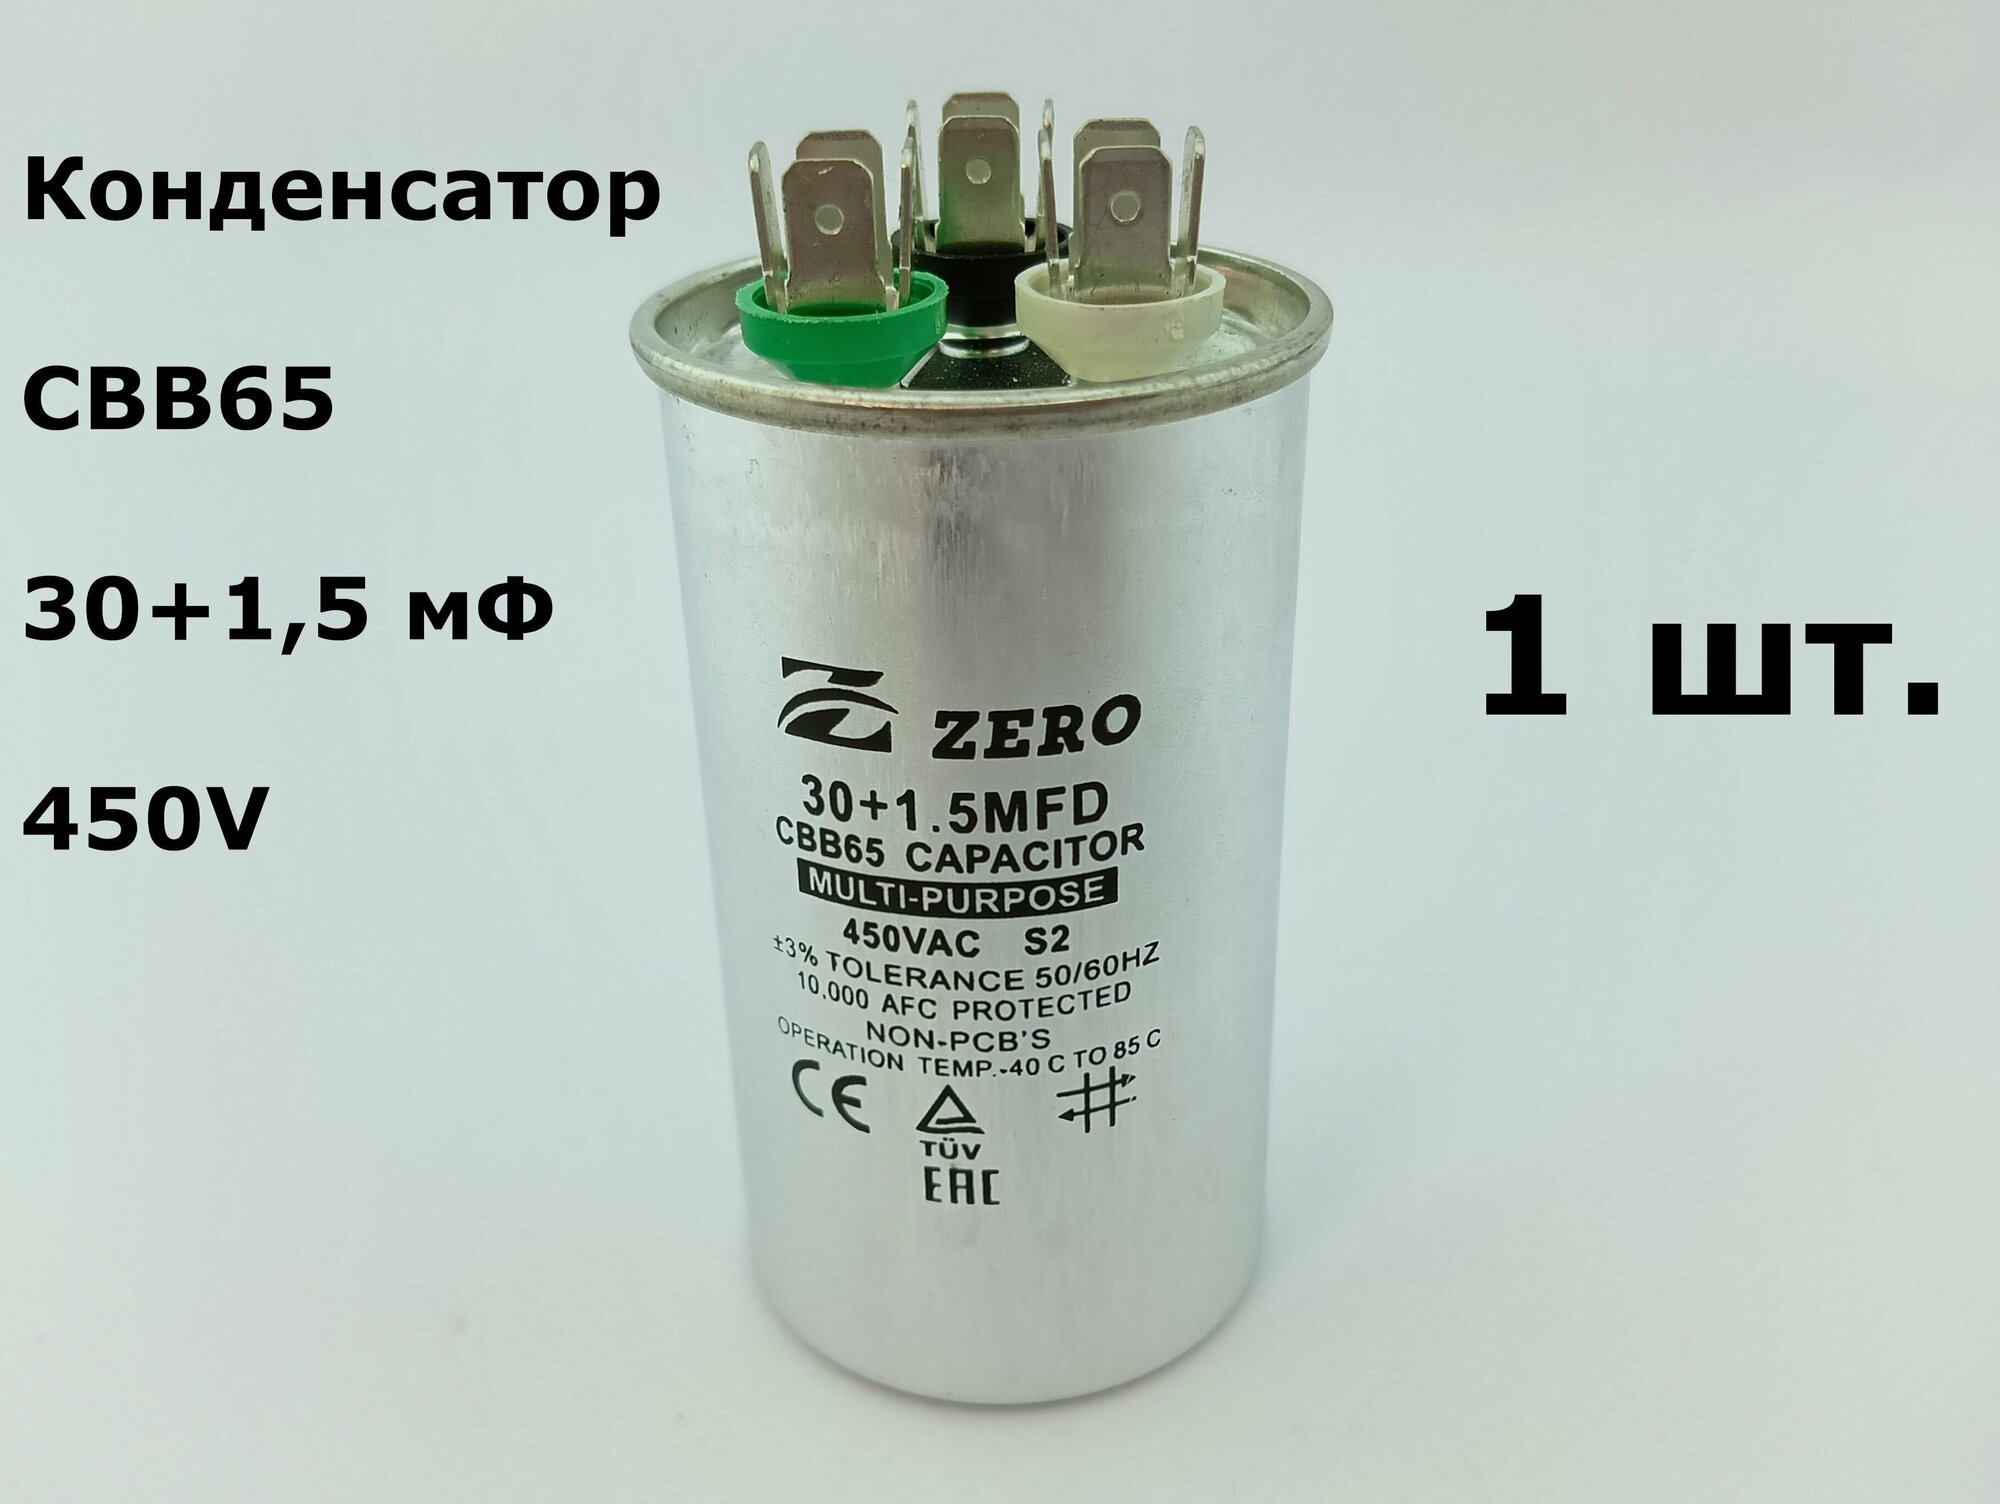 Конденсатор CBB65 30+1,5 мФ 450V (металл) совмещенный - 1 шт.